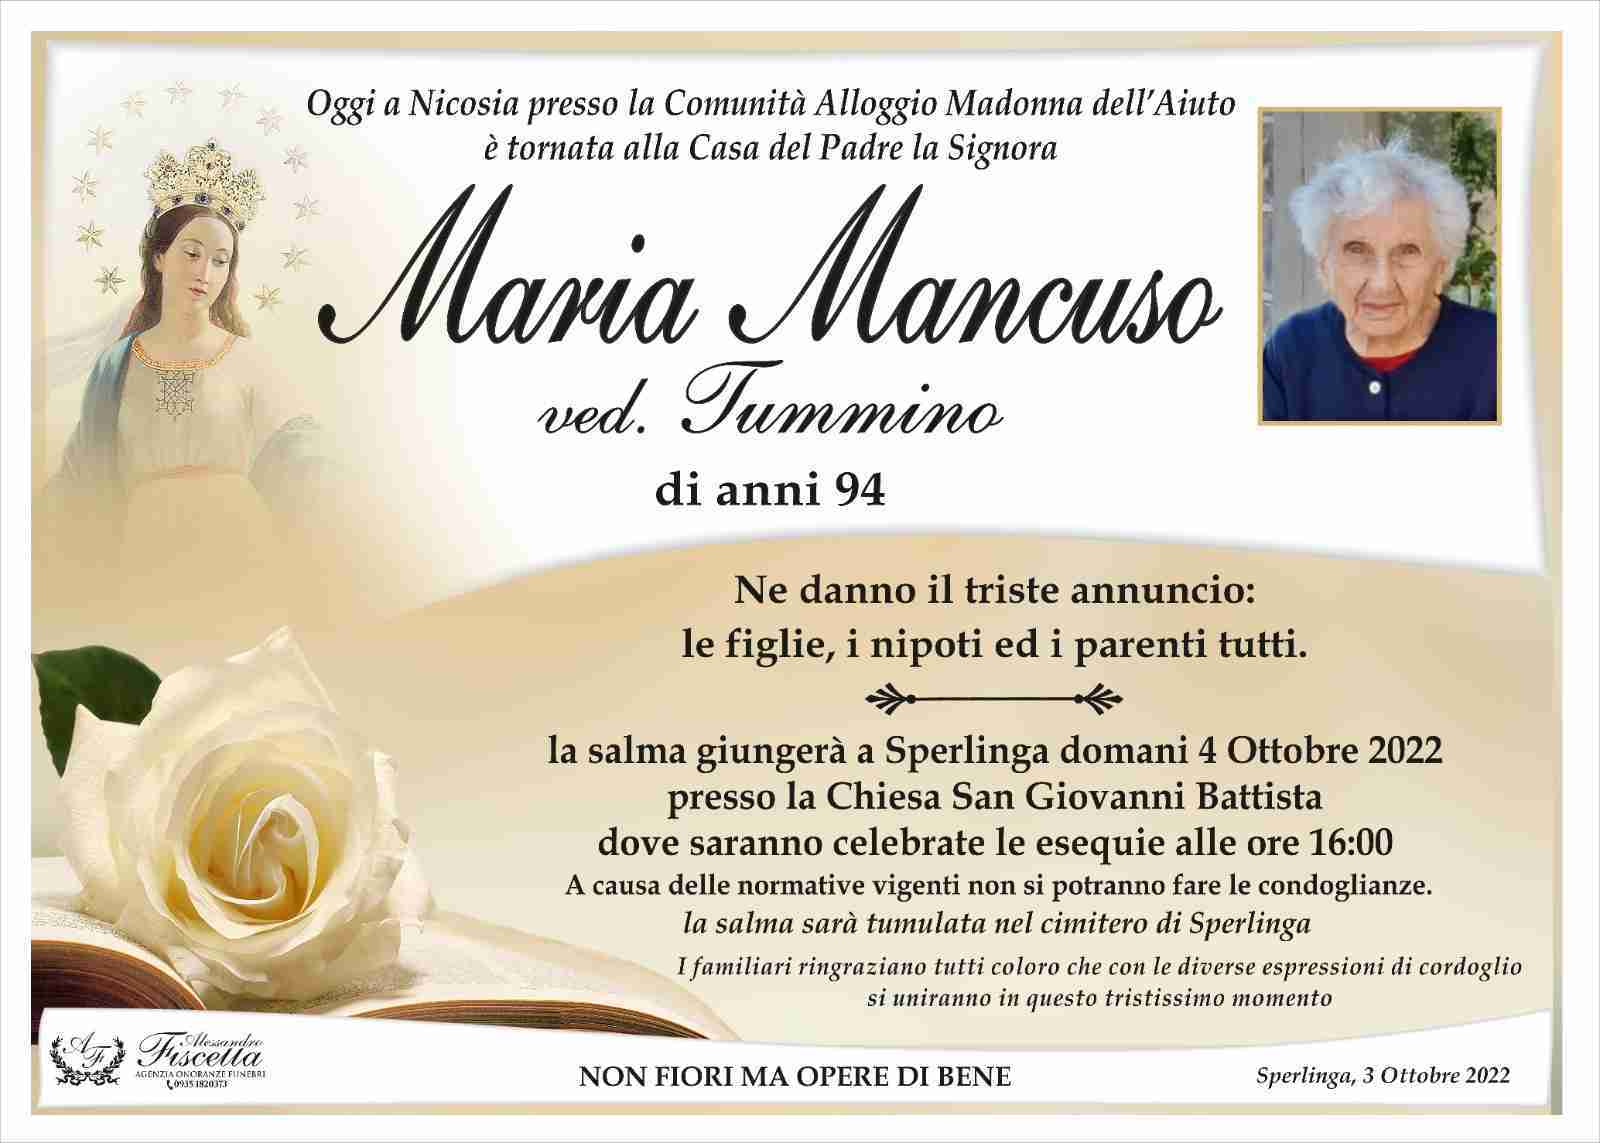 Maria Mancuso